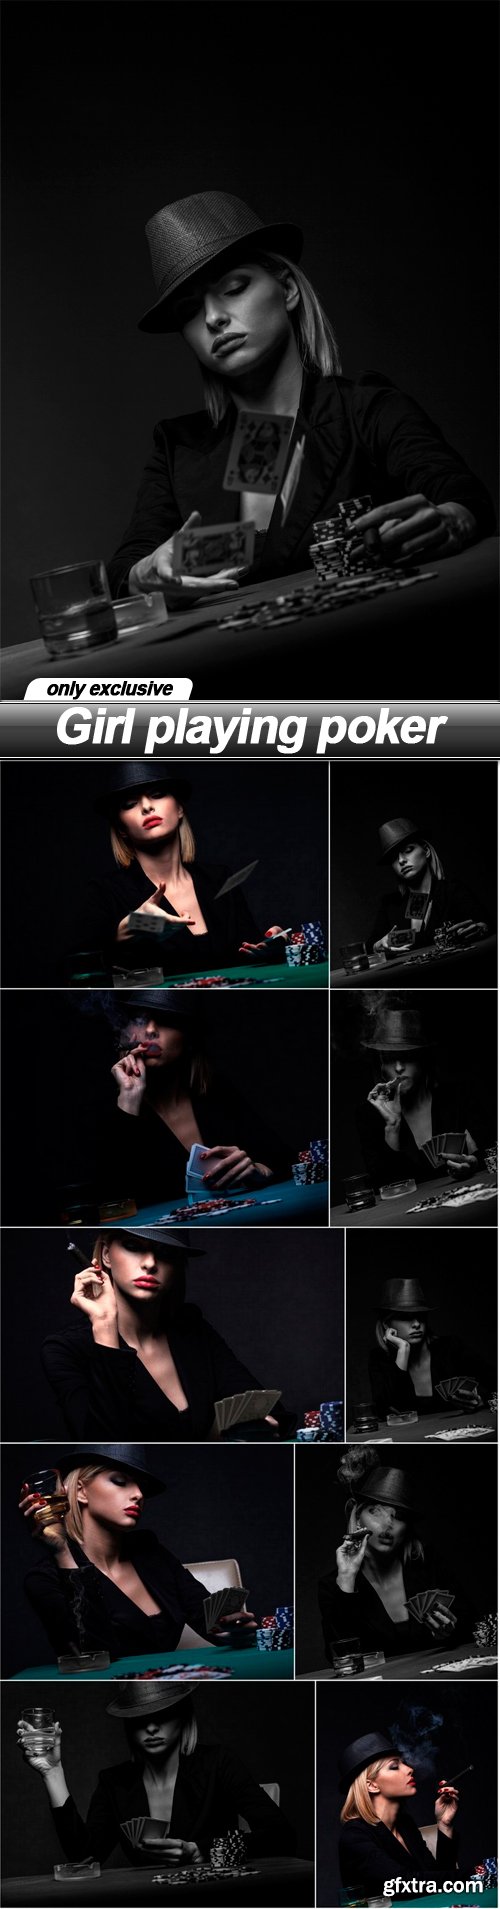 Girl playing poker - 10 UHQ JPEG